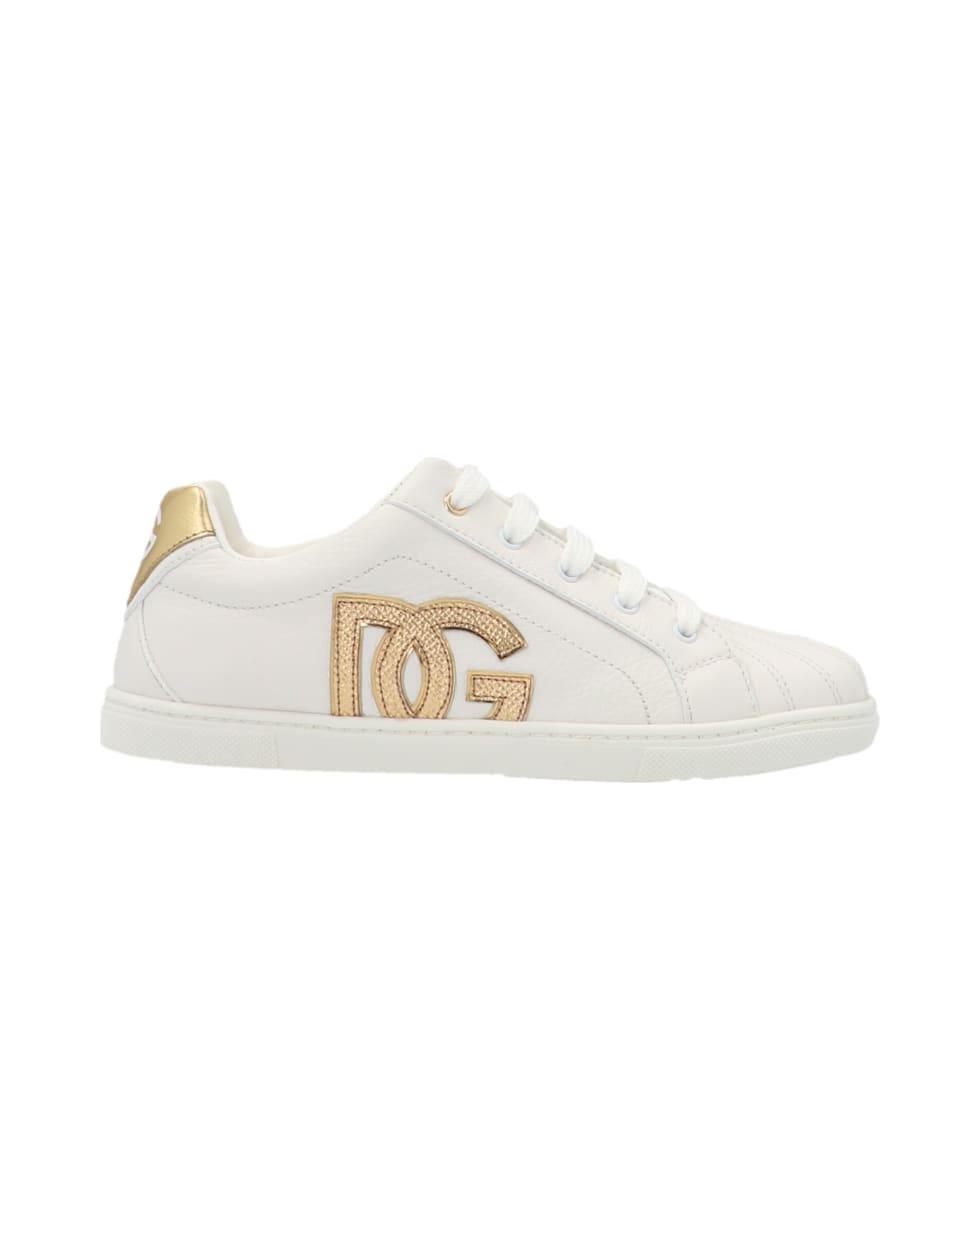 Dolce & Gabbana 'flash' Shoes - White